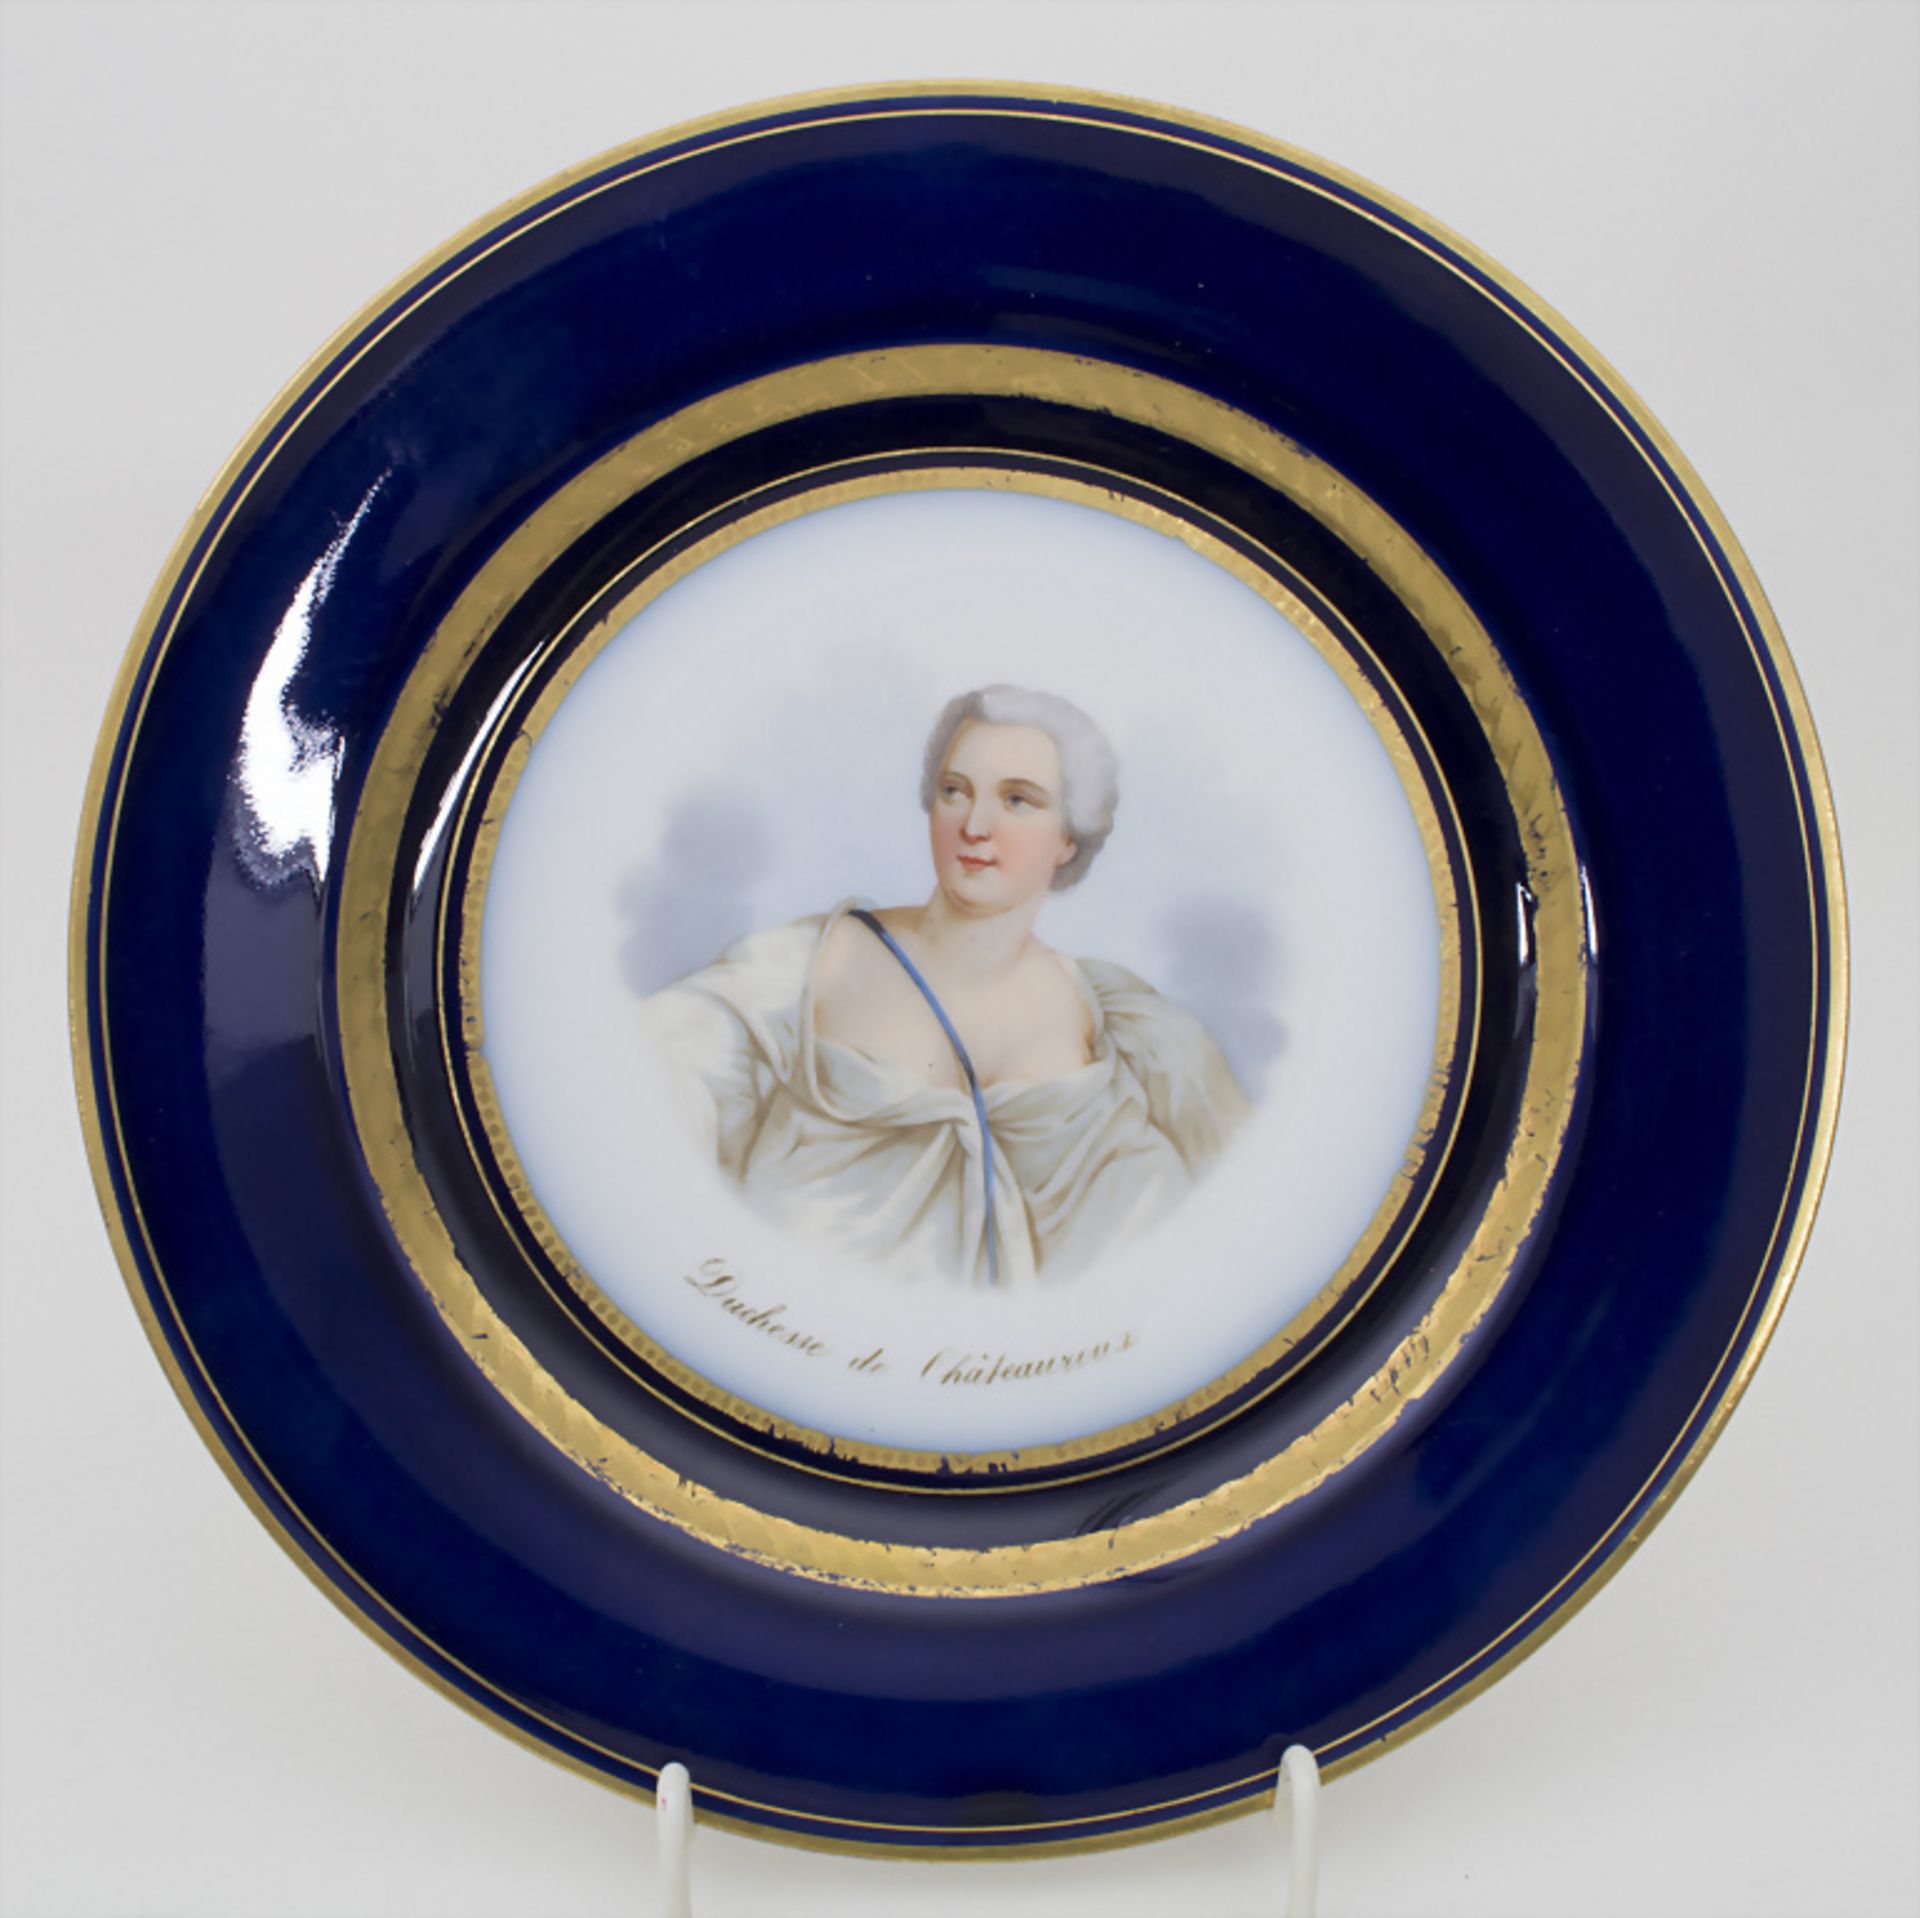 5 Teller mit Damenportraits / A set of 5 plates with ladies portaits, Sèvres, 1860-1861 - Image 8 of 17